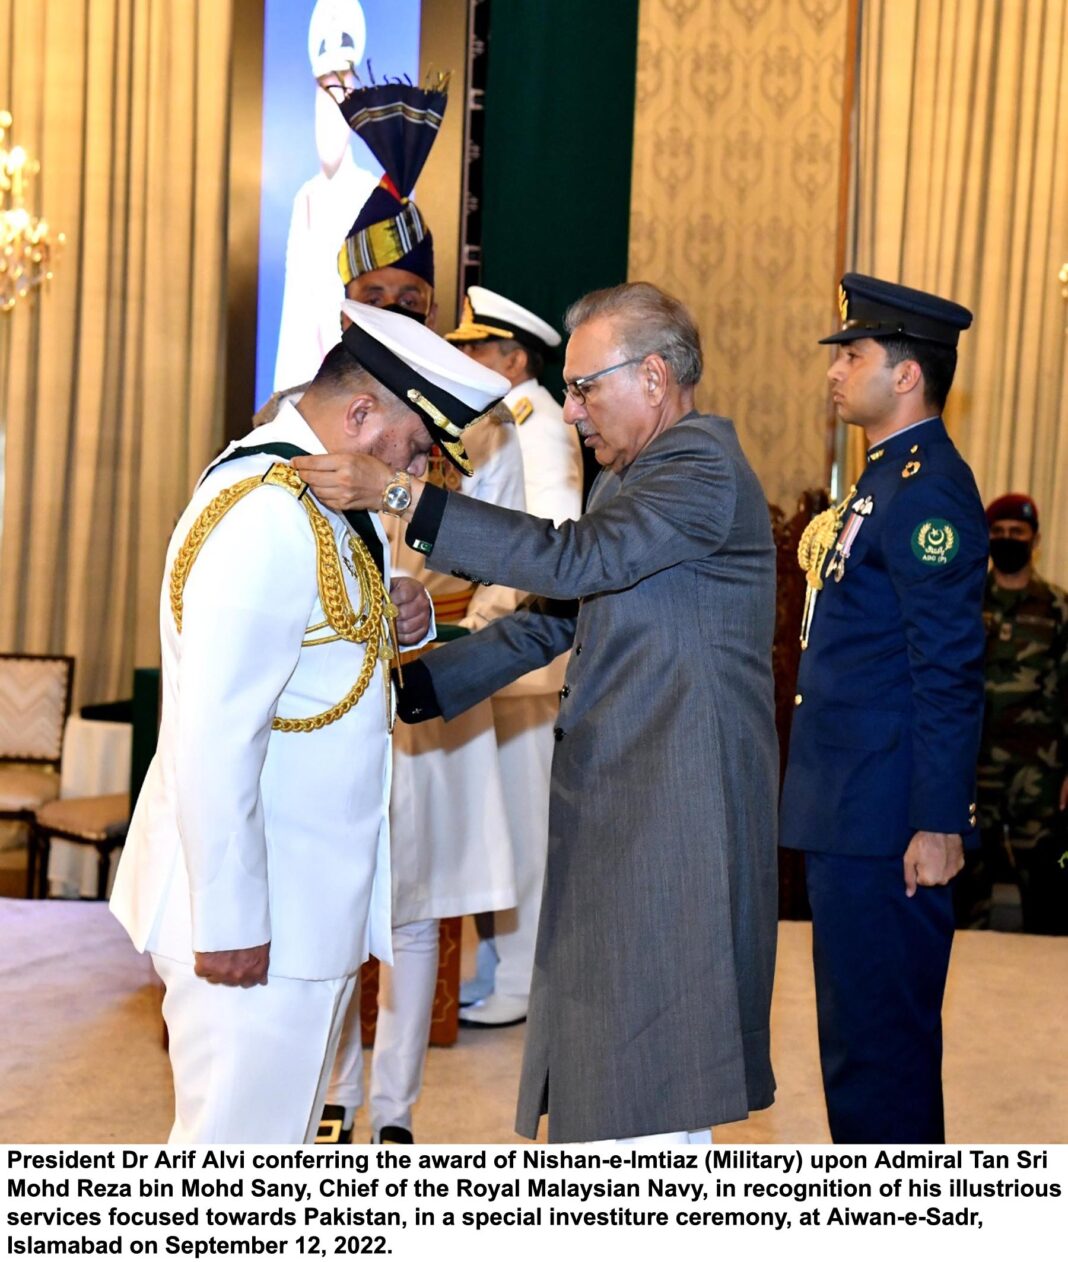 President confers Nishan-e-Imtiaz (Military) upon Chief of Royal Malaysian Navy